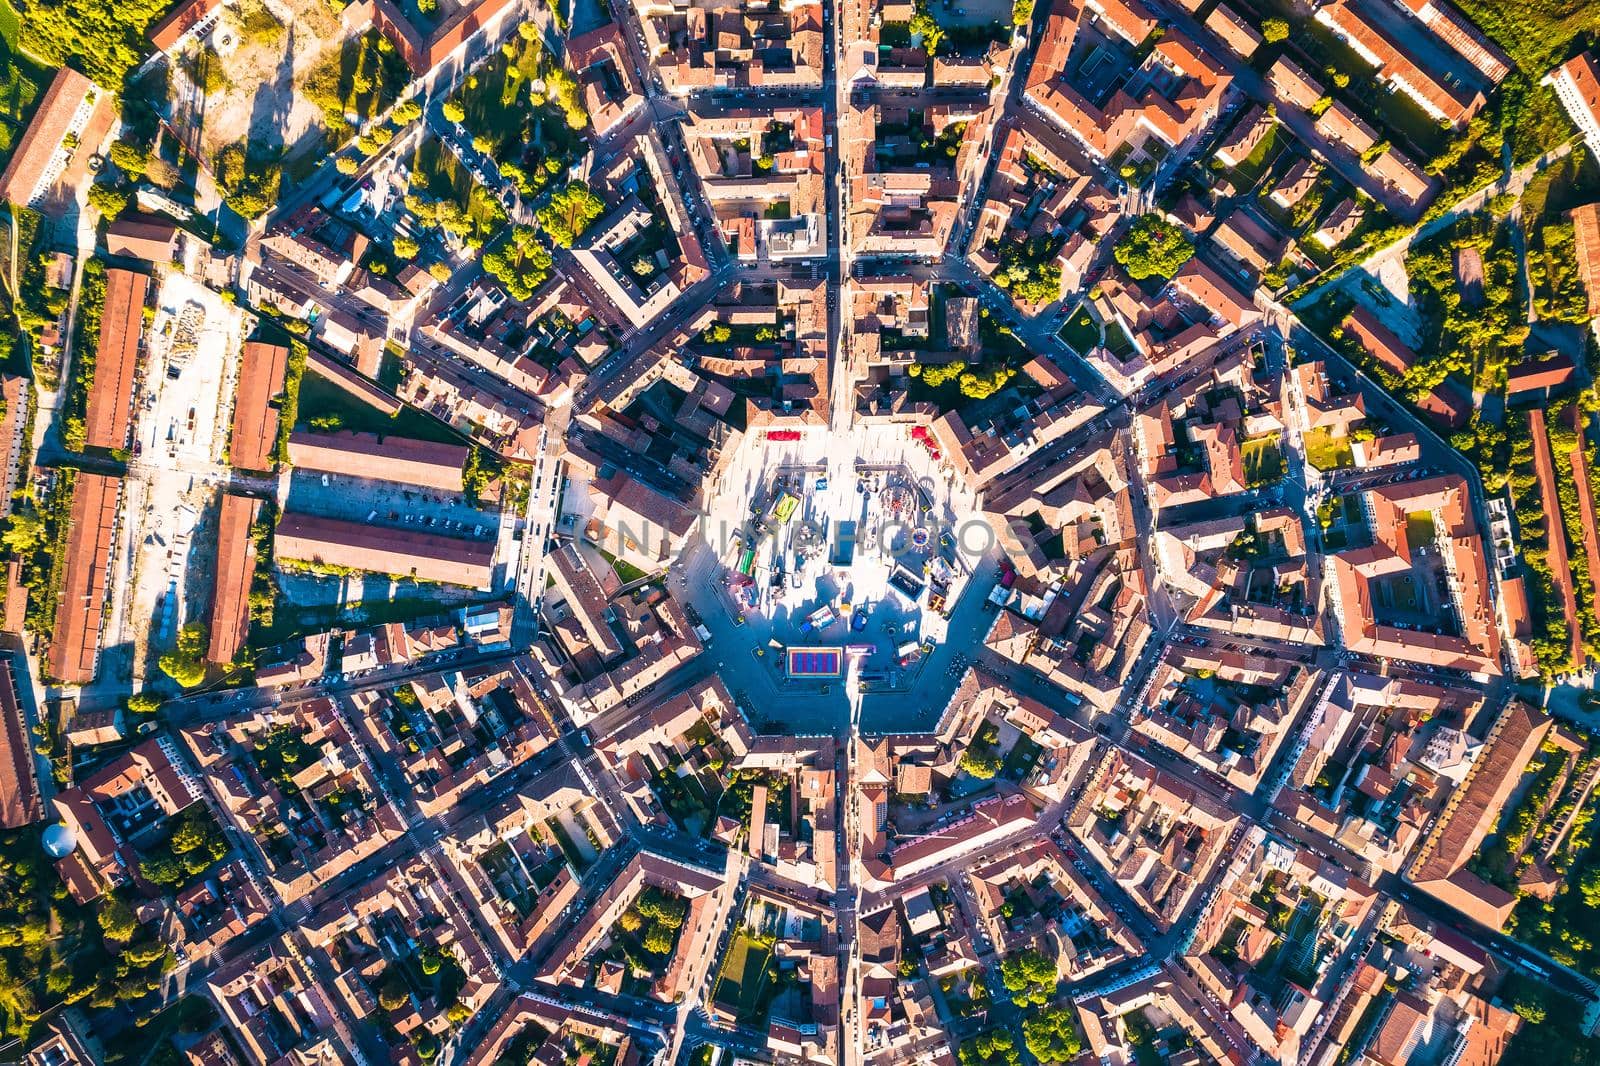 Town of Palmanova hexagonal square aerial view, UNESCO world heritage site by xbrchx